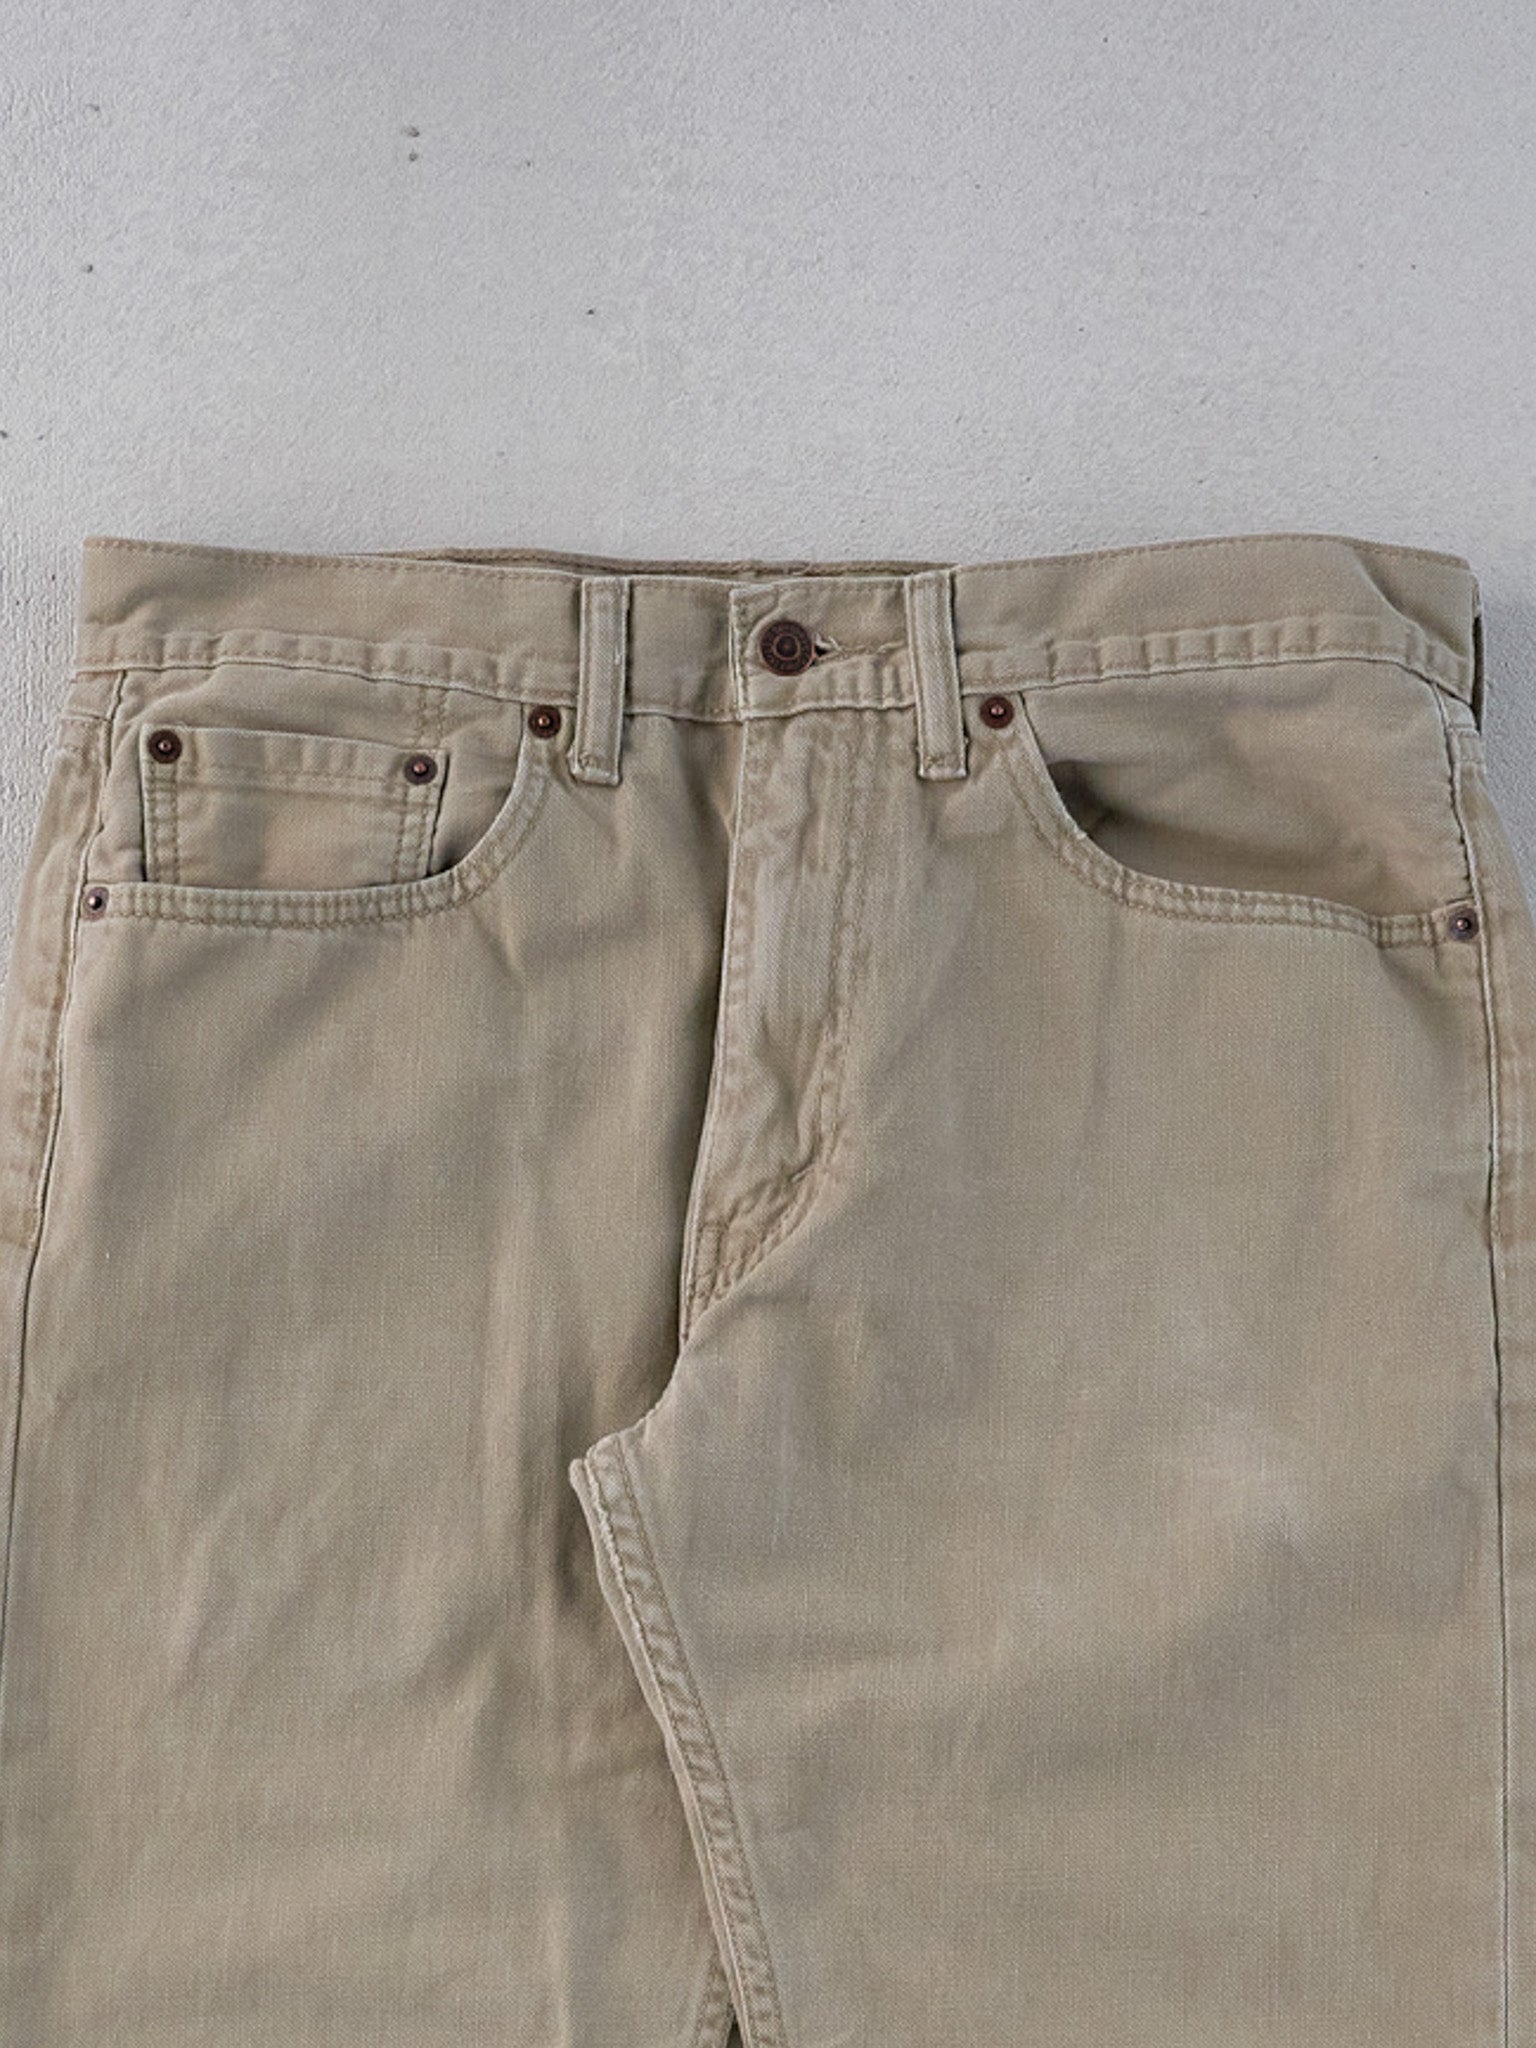 Vintage 90s Khaki Levi's 505 Denim Jeans (32x30)